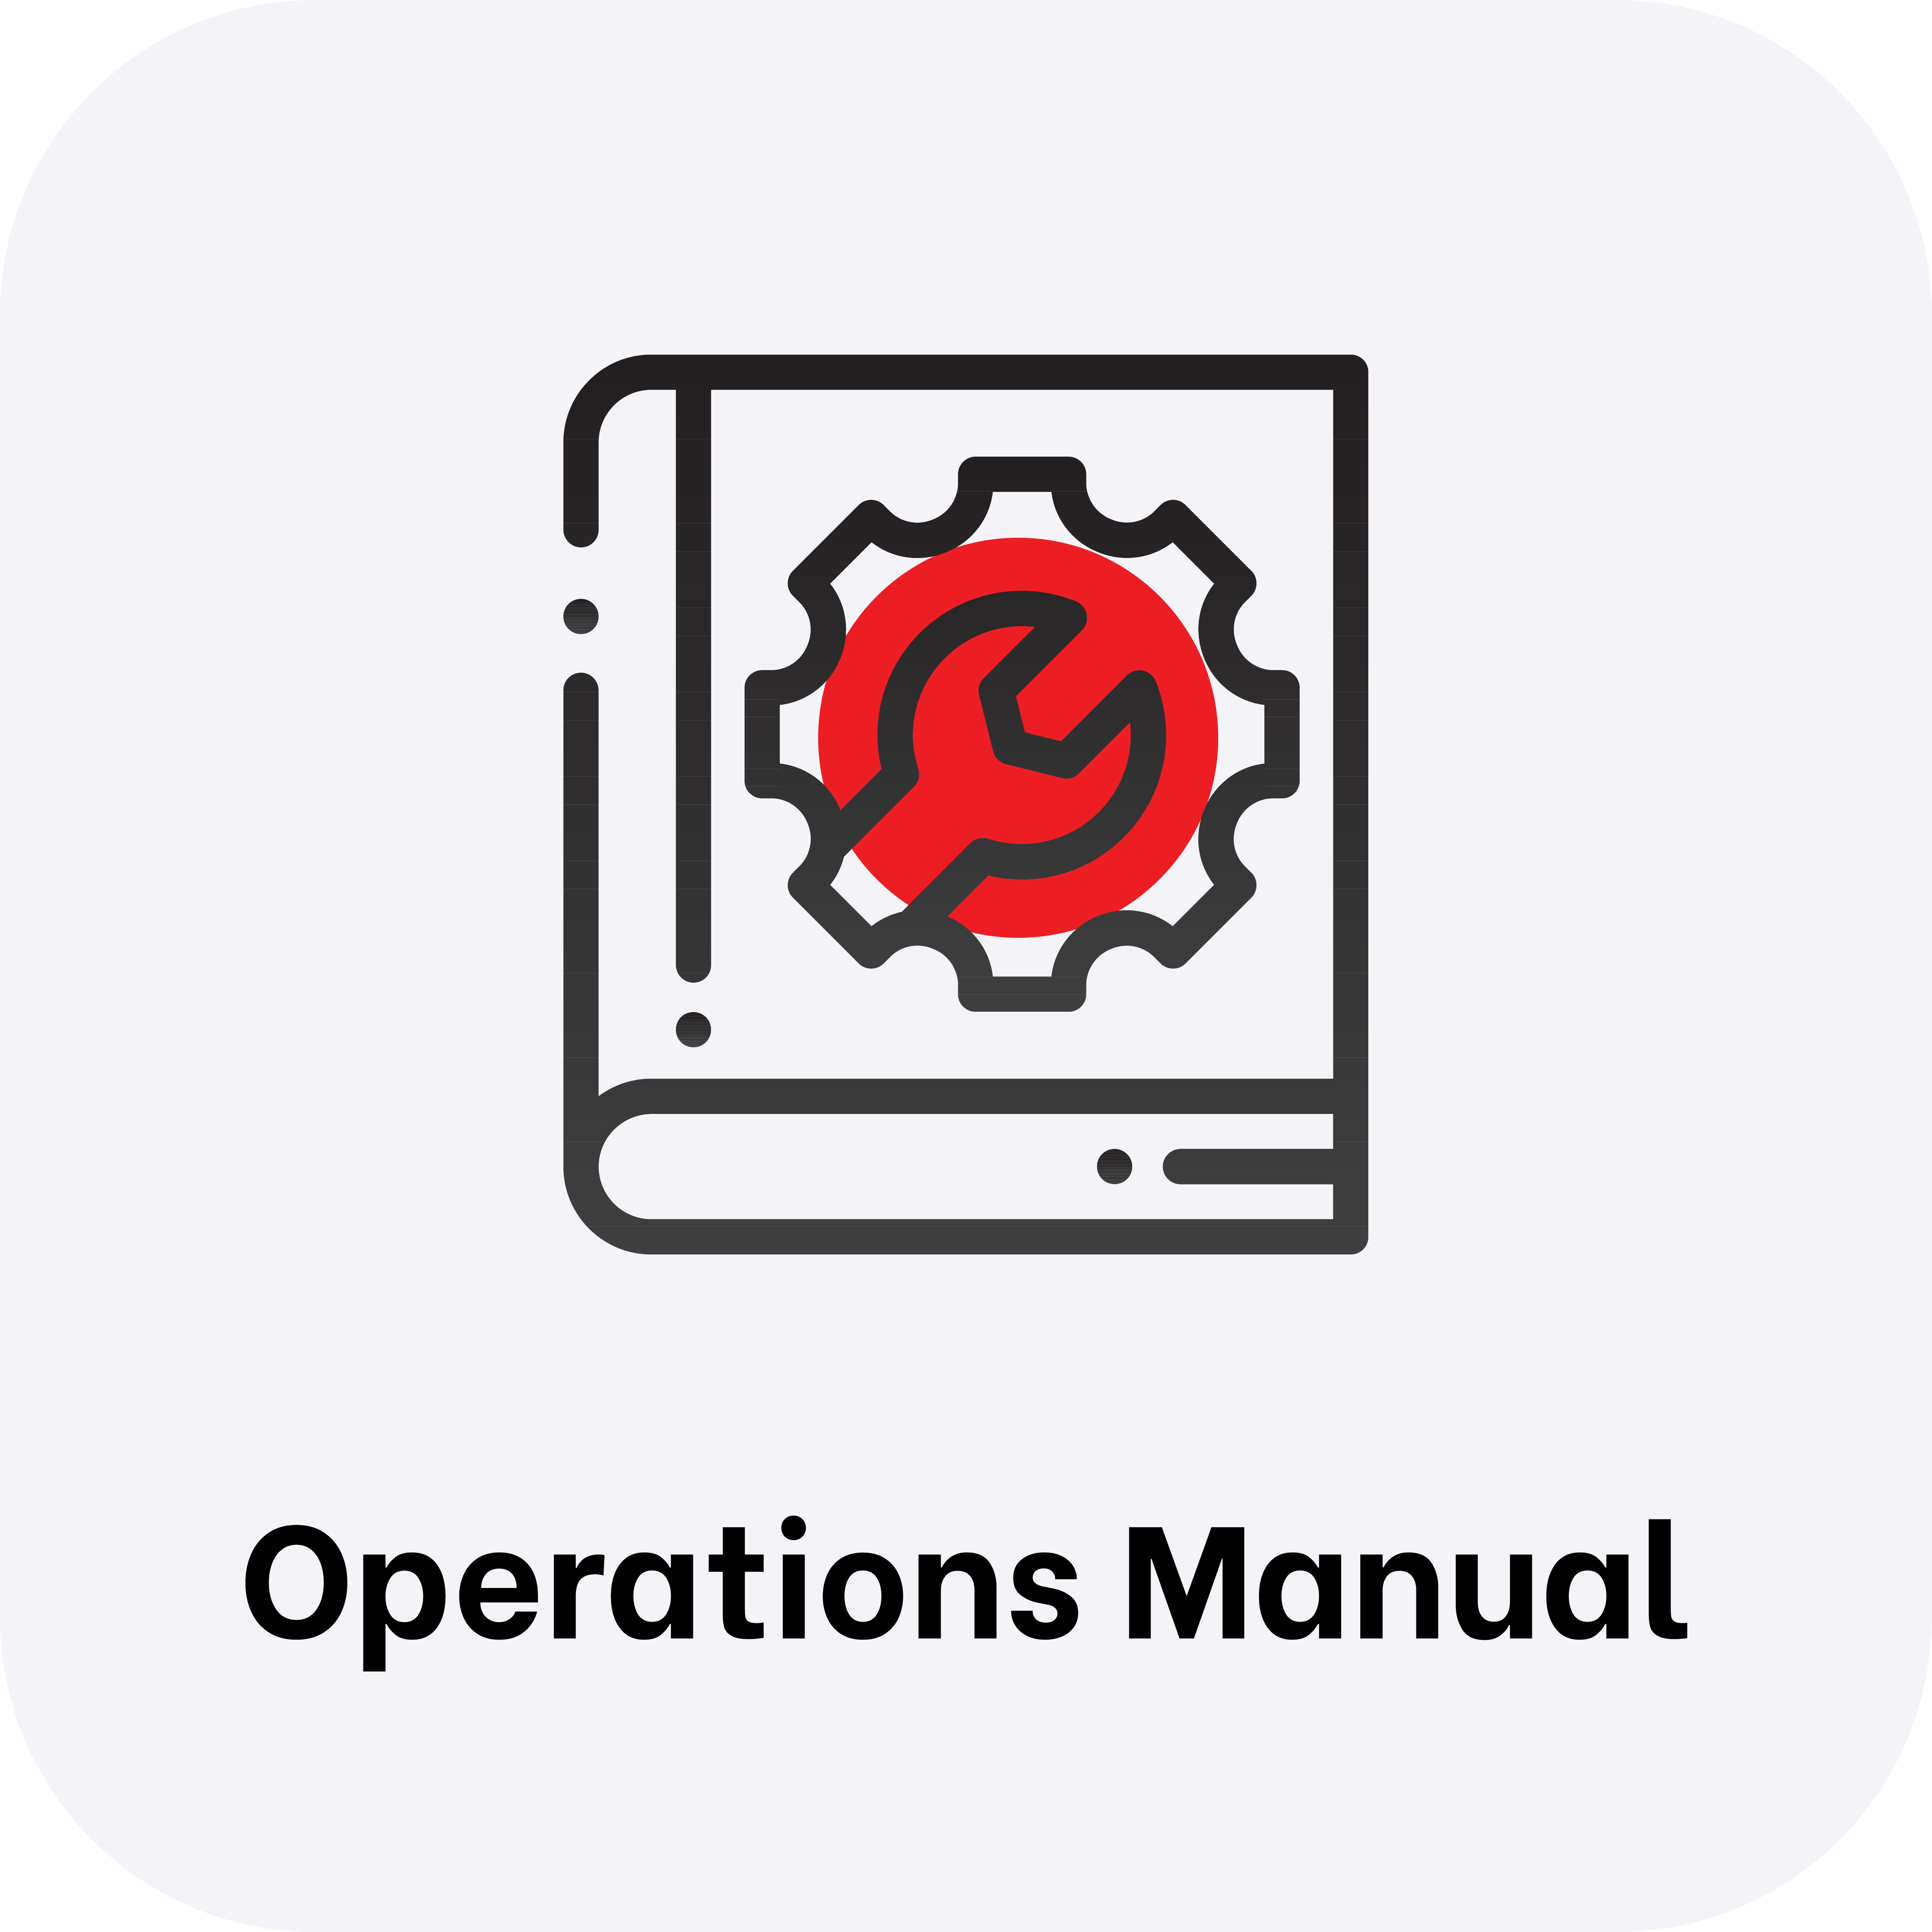 Operations Manual.png